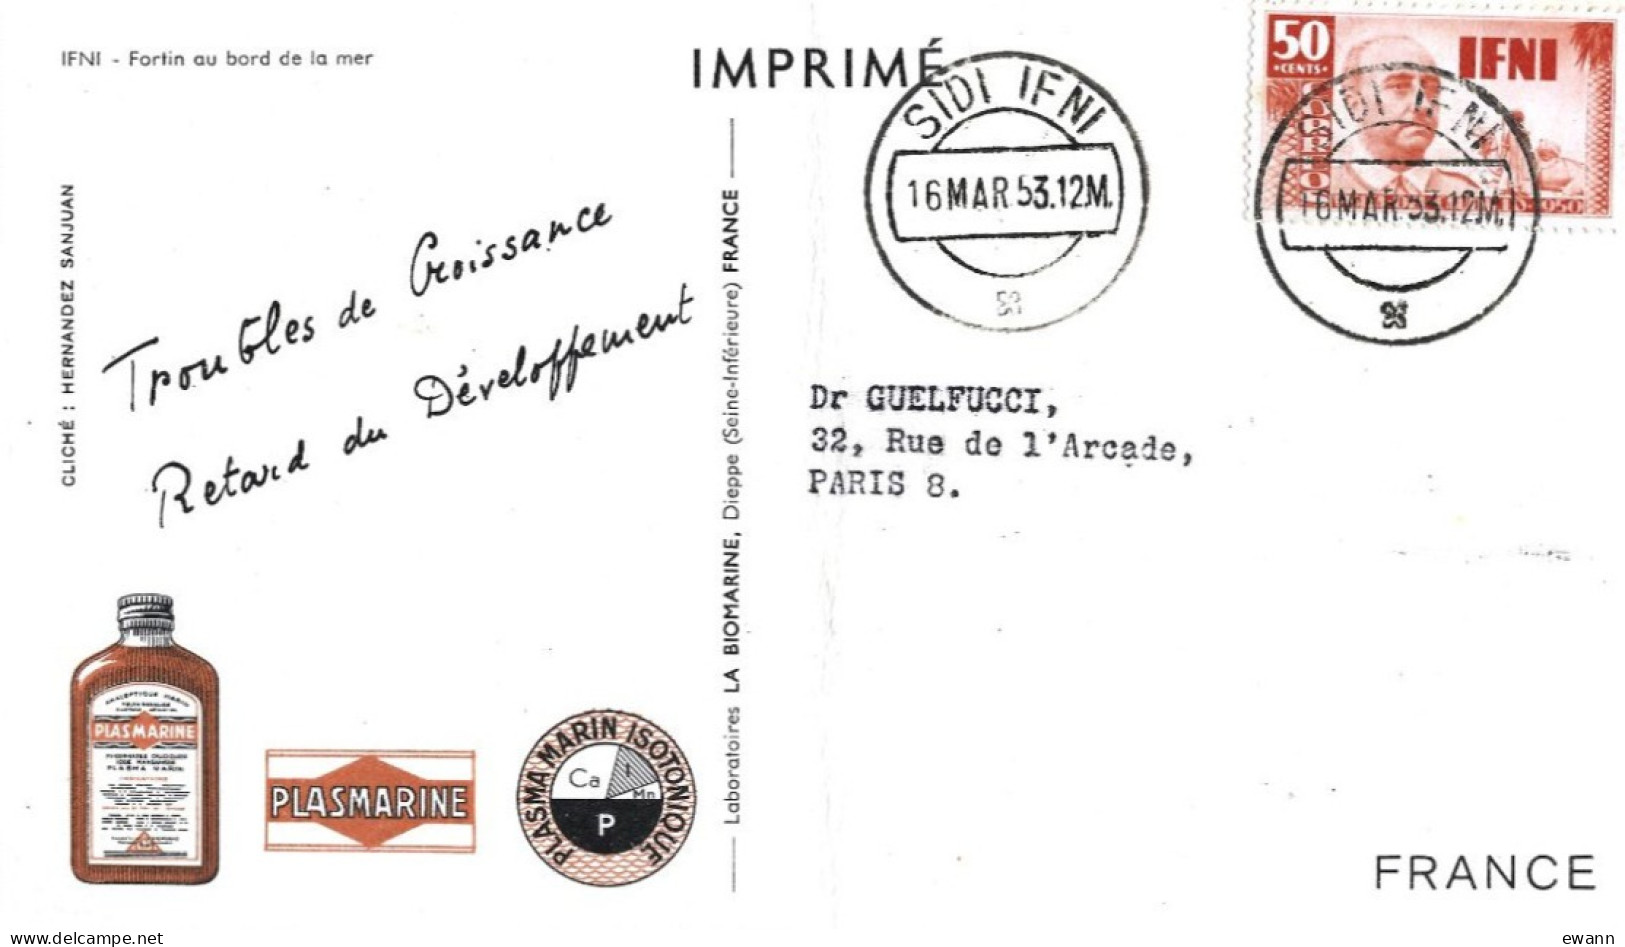 2 Cartes Postales Publicitaires "Plasmarine" - Ifni, Sahara Occidental + Timbres - Publicité